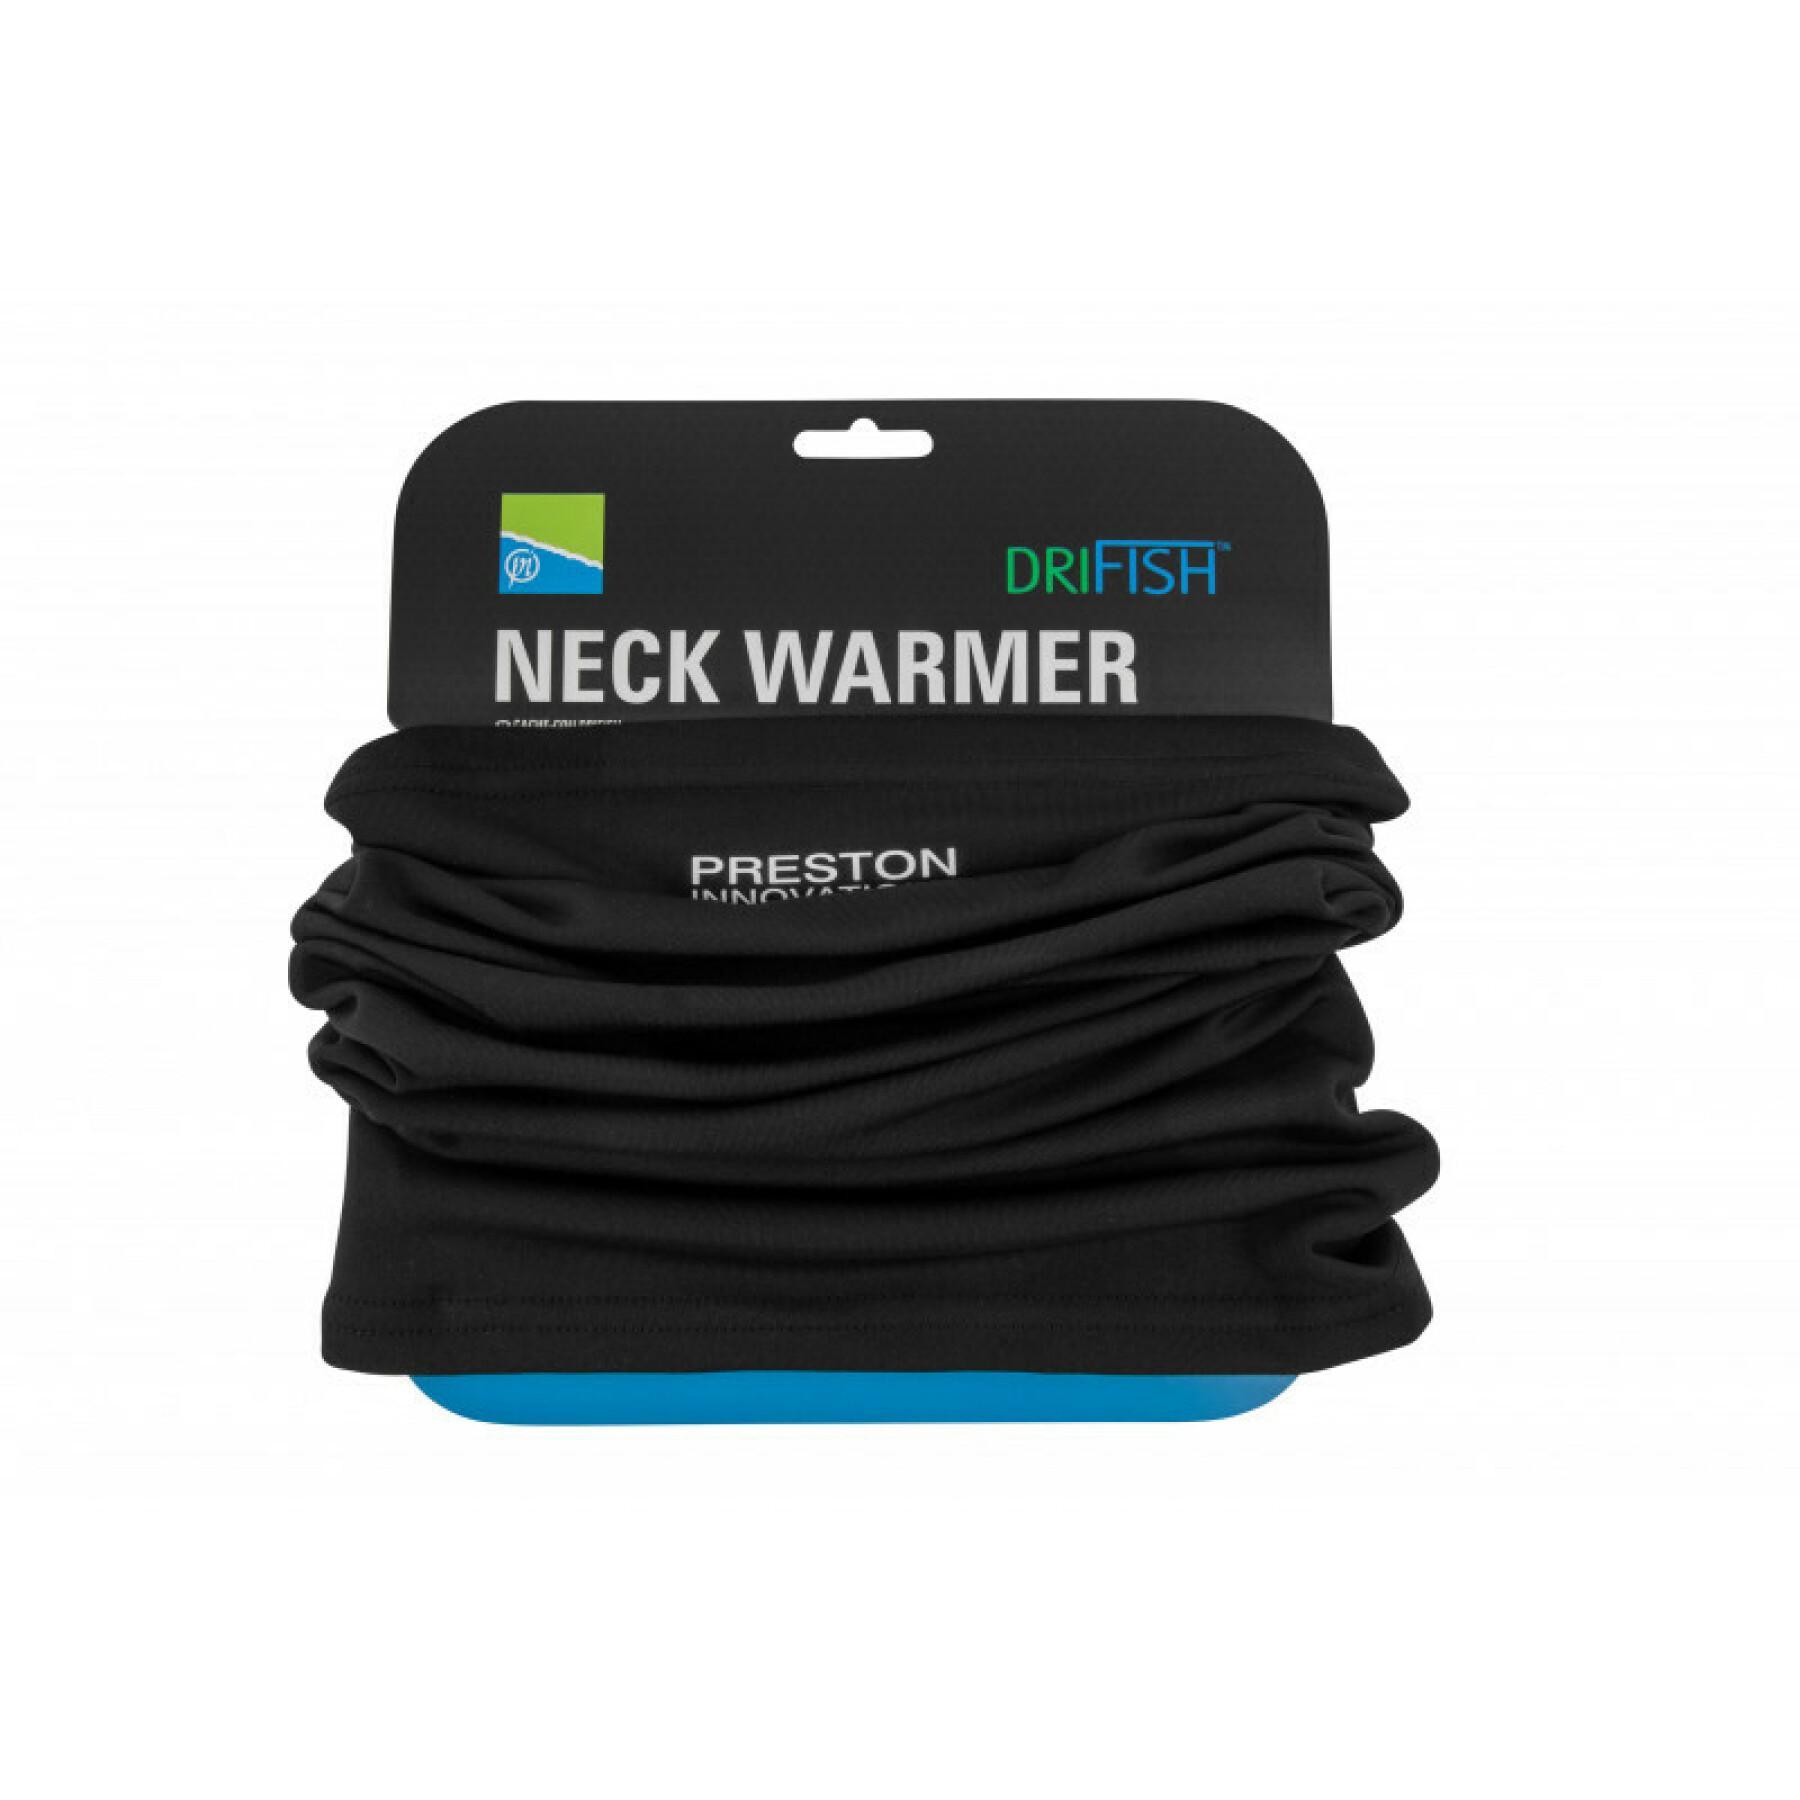 Colar Preston drifish neck warmer